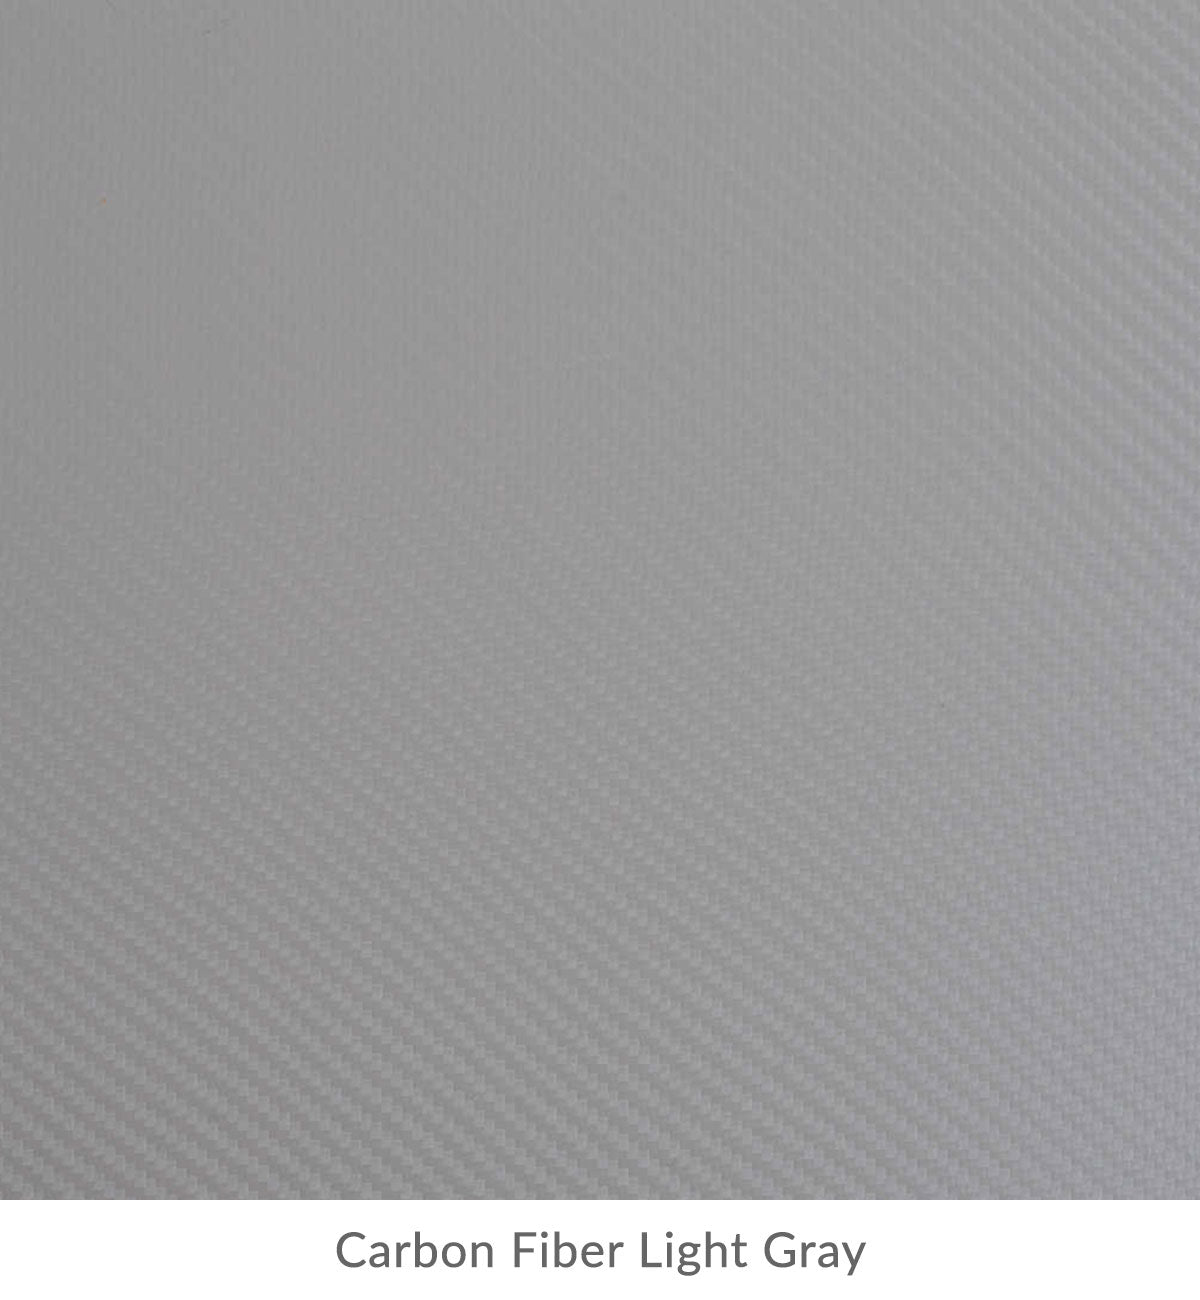 Carbon Fiber Light Gray